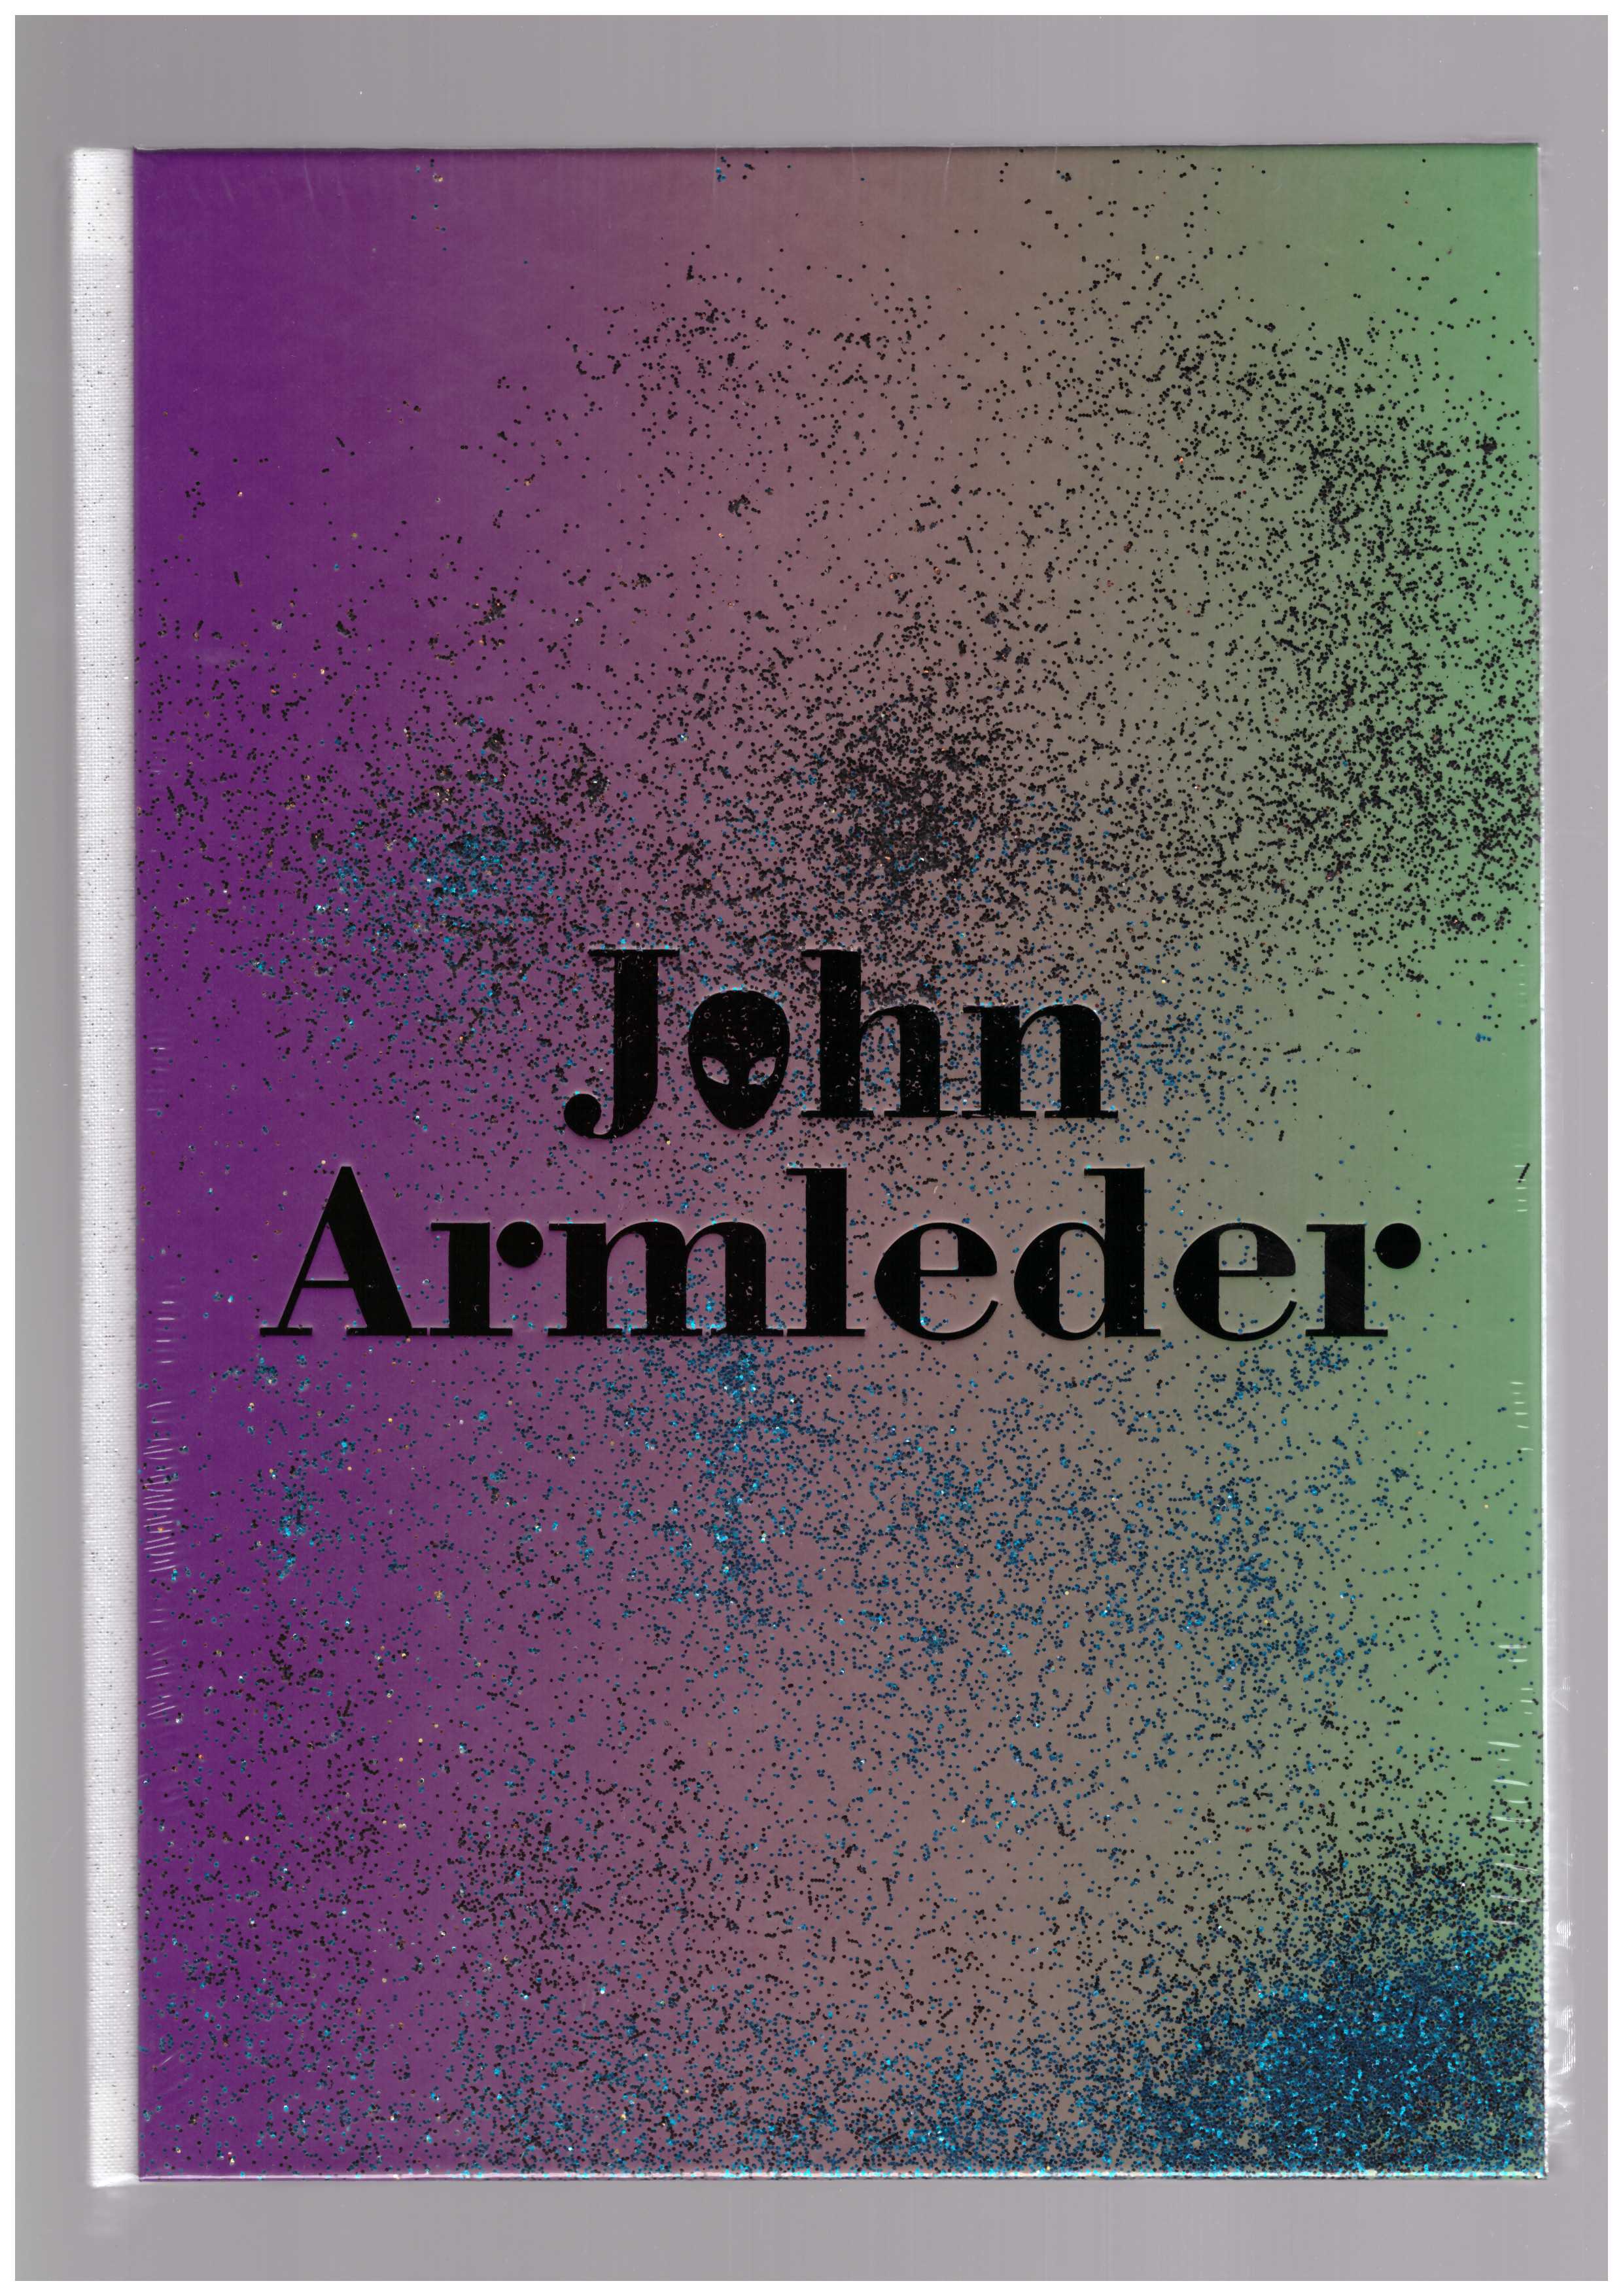 ARMLEDER, John  - The Grand Tour